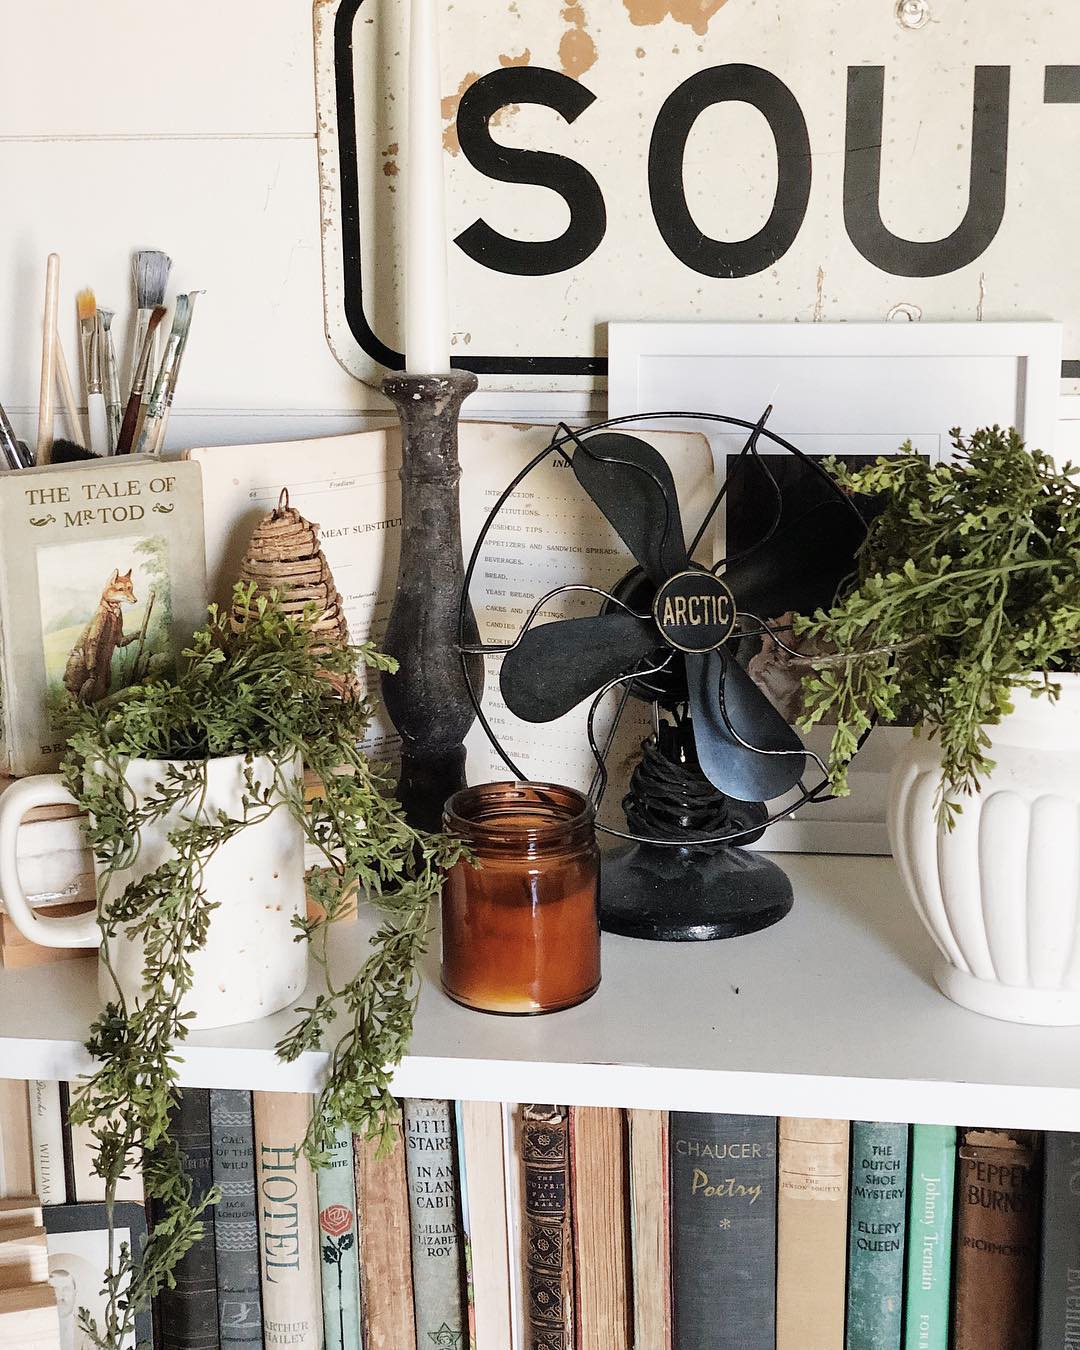 Vintage fan and vase on a bookshelf. Photo by Instagram user @keeleymckendree